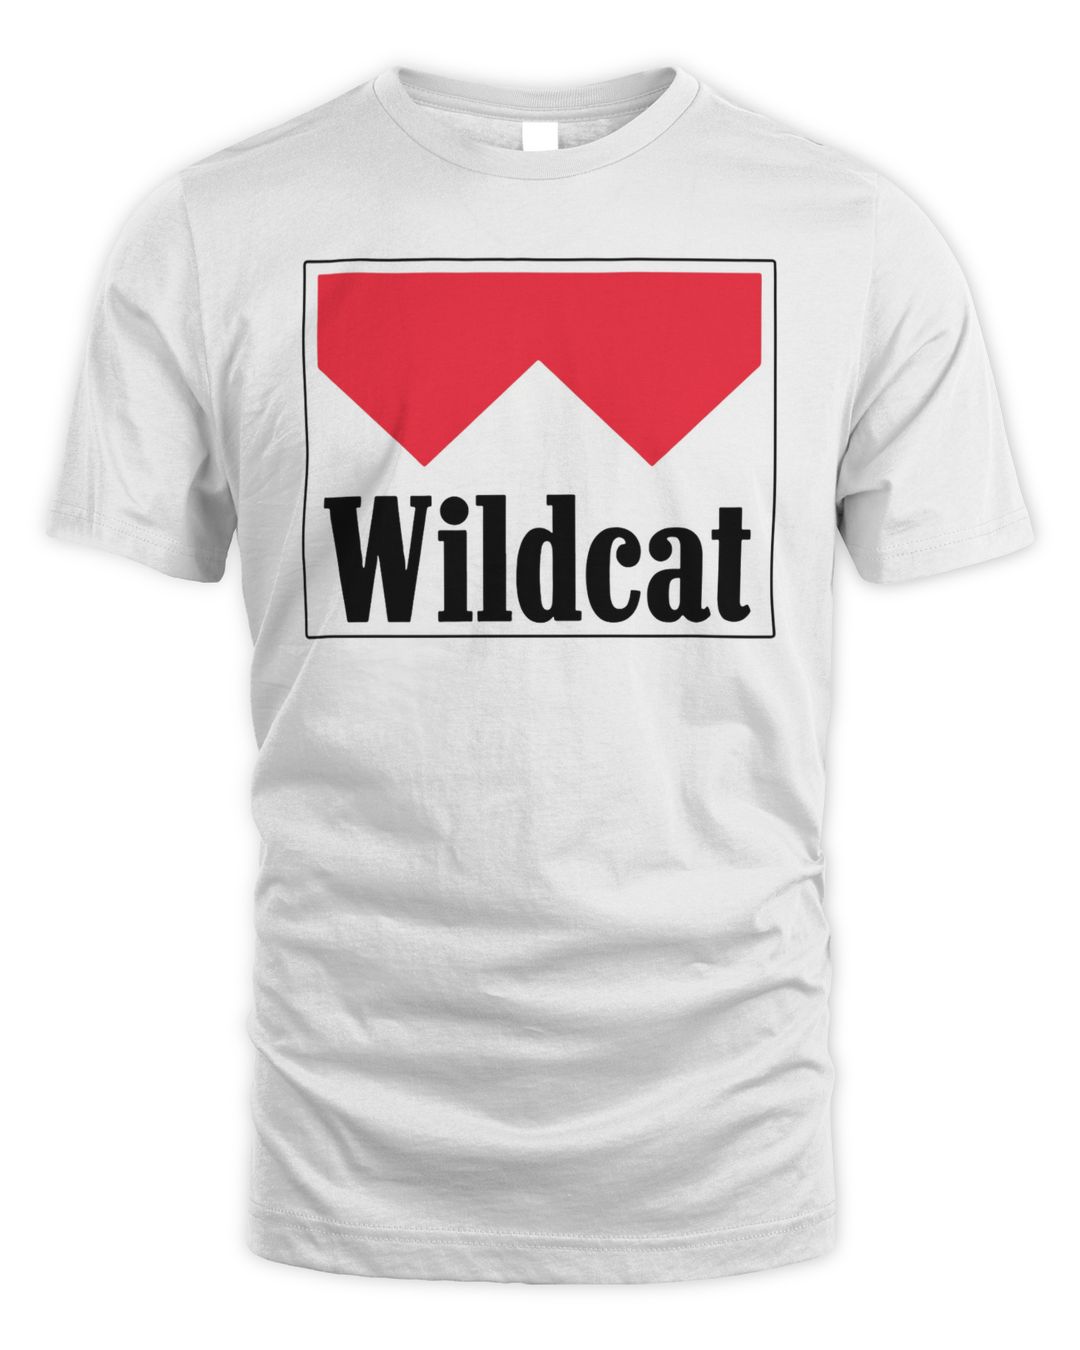 Wildcat Merch I Am Wildcat Championship Shirt ja1